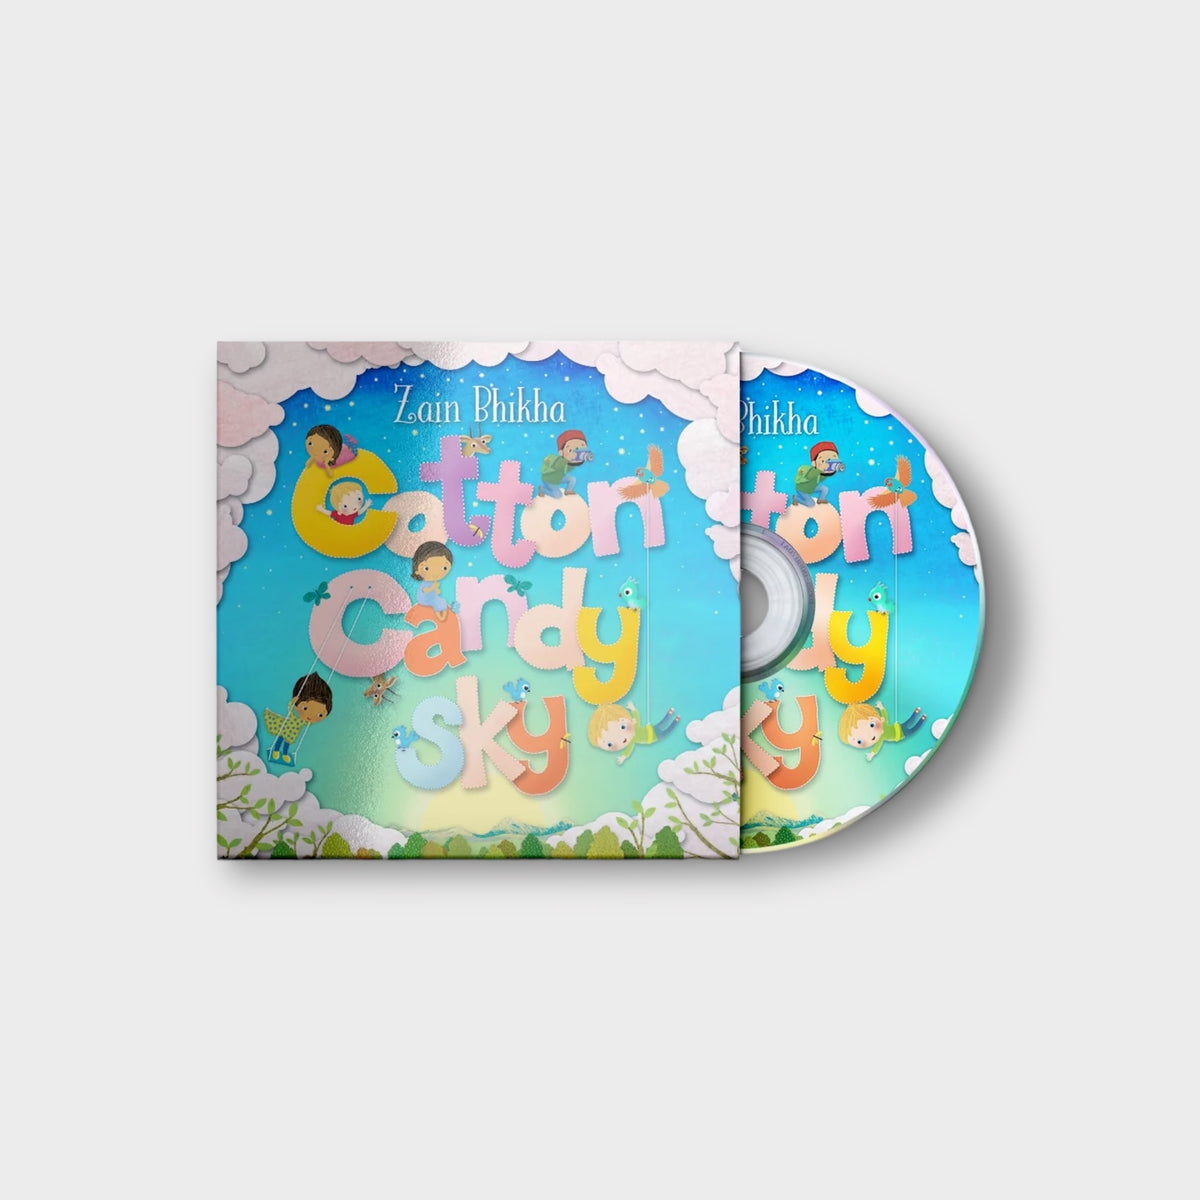 Cotton Candy Sky - CD By Zain Bhikha